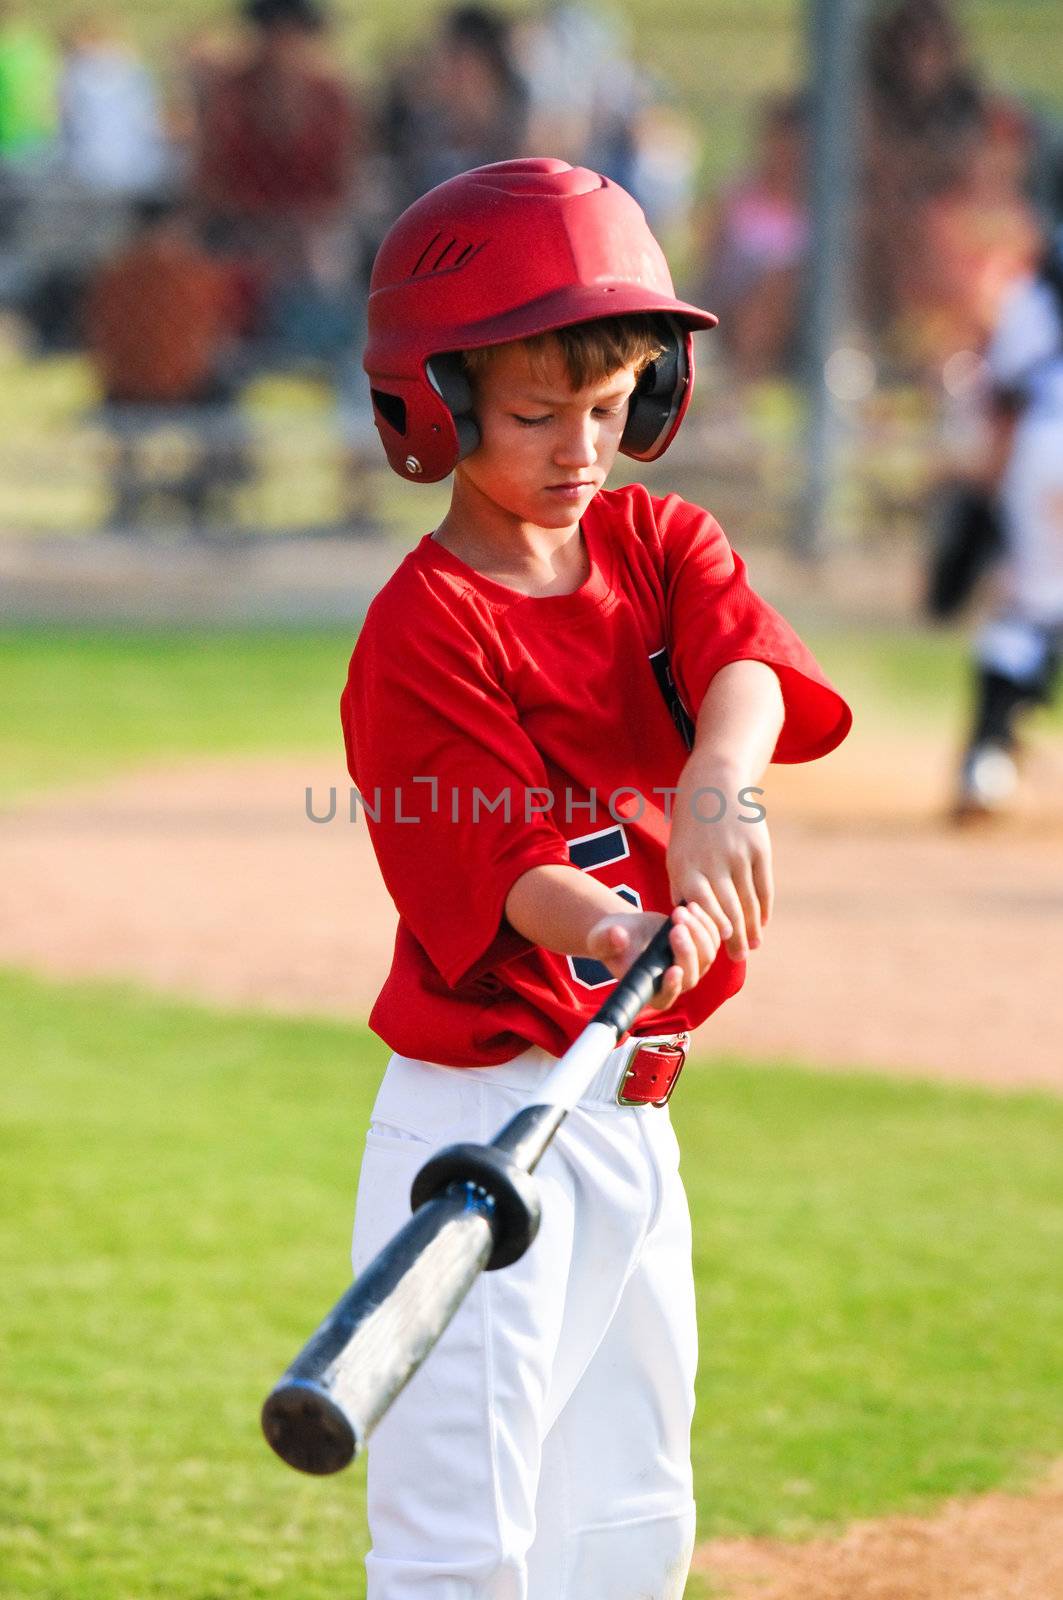 Baseball boy looking down while warming up to bat.